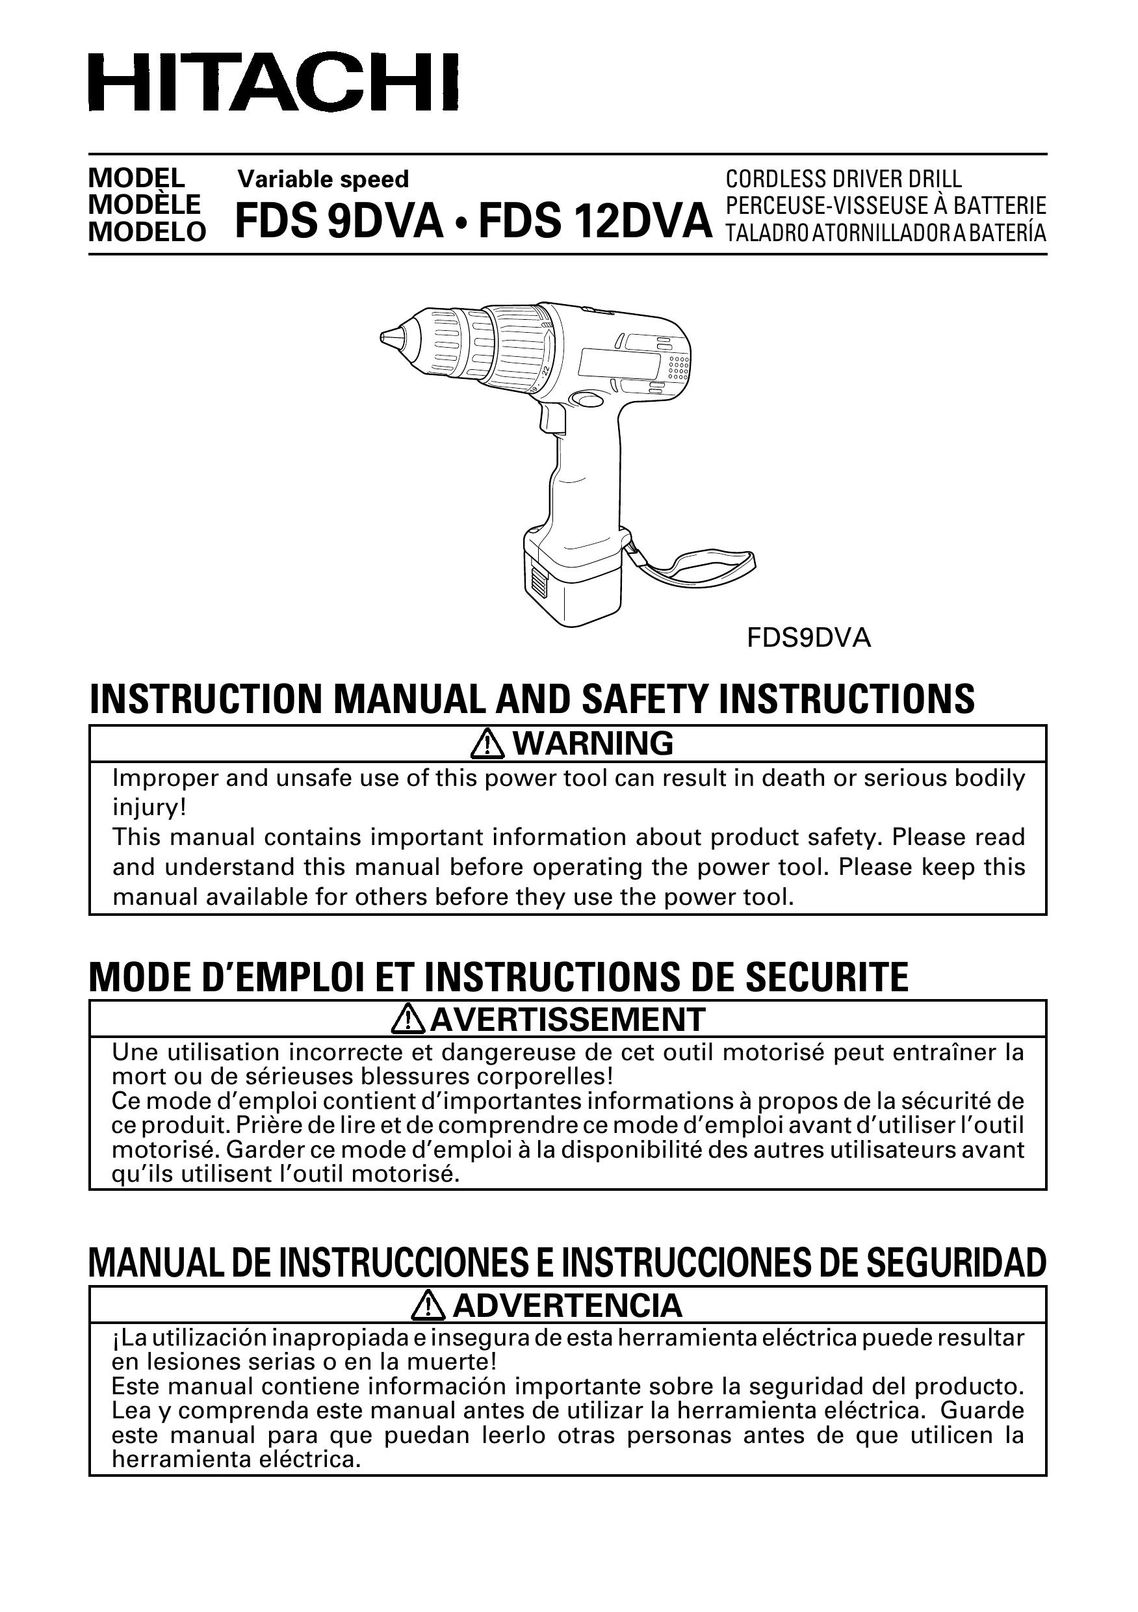 Hitachi FDS 9DVA Cordless Drill User Manual